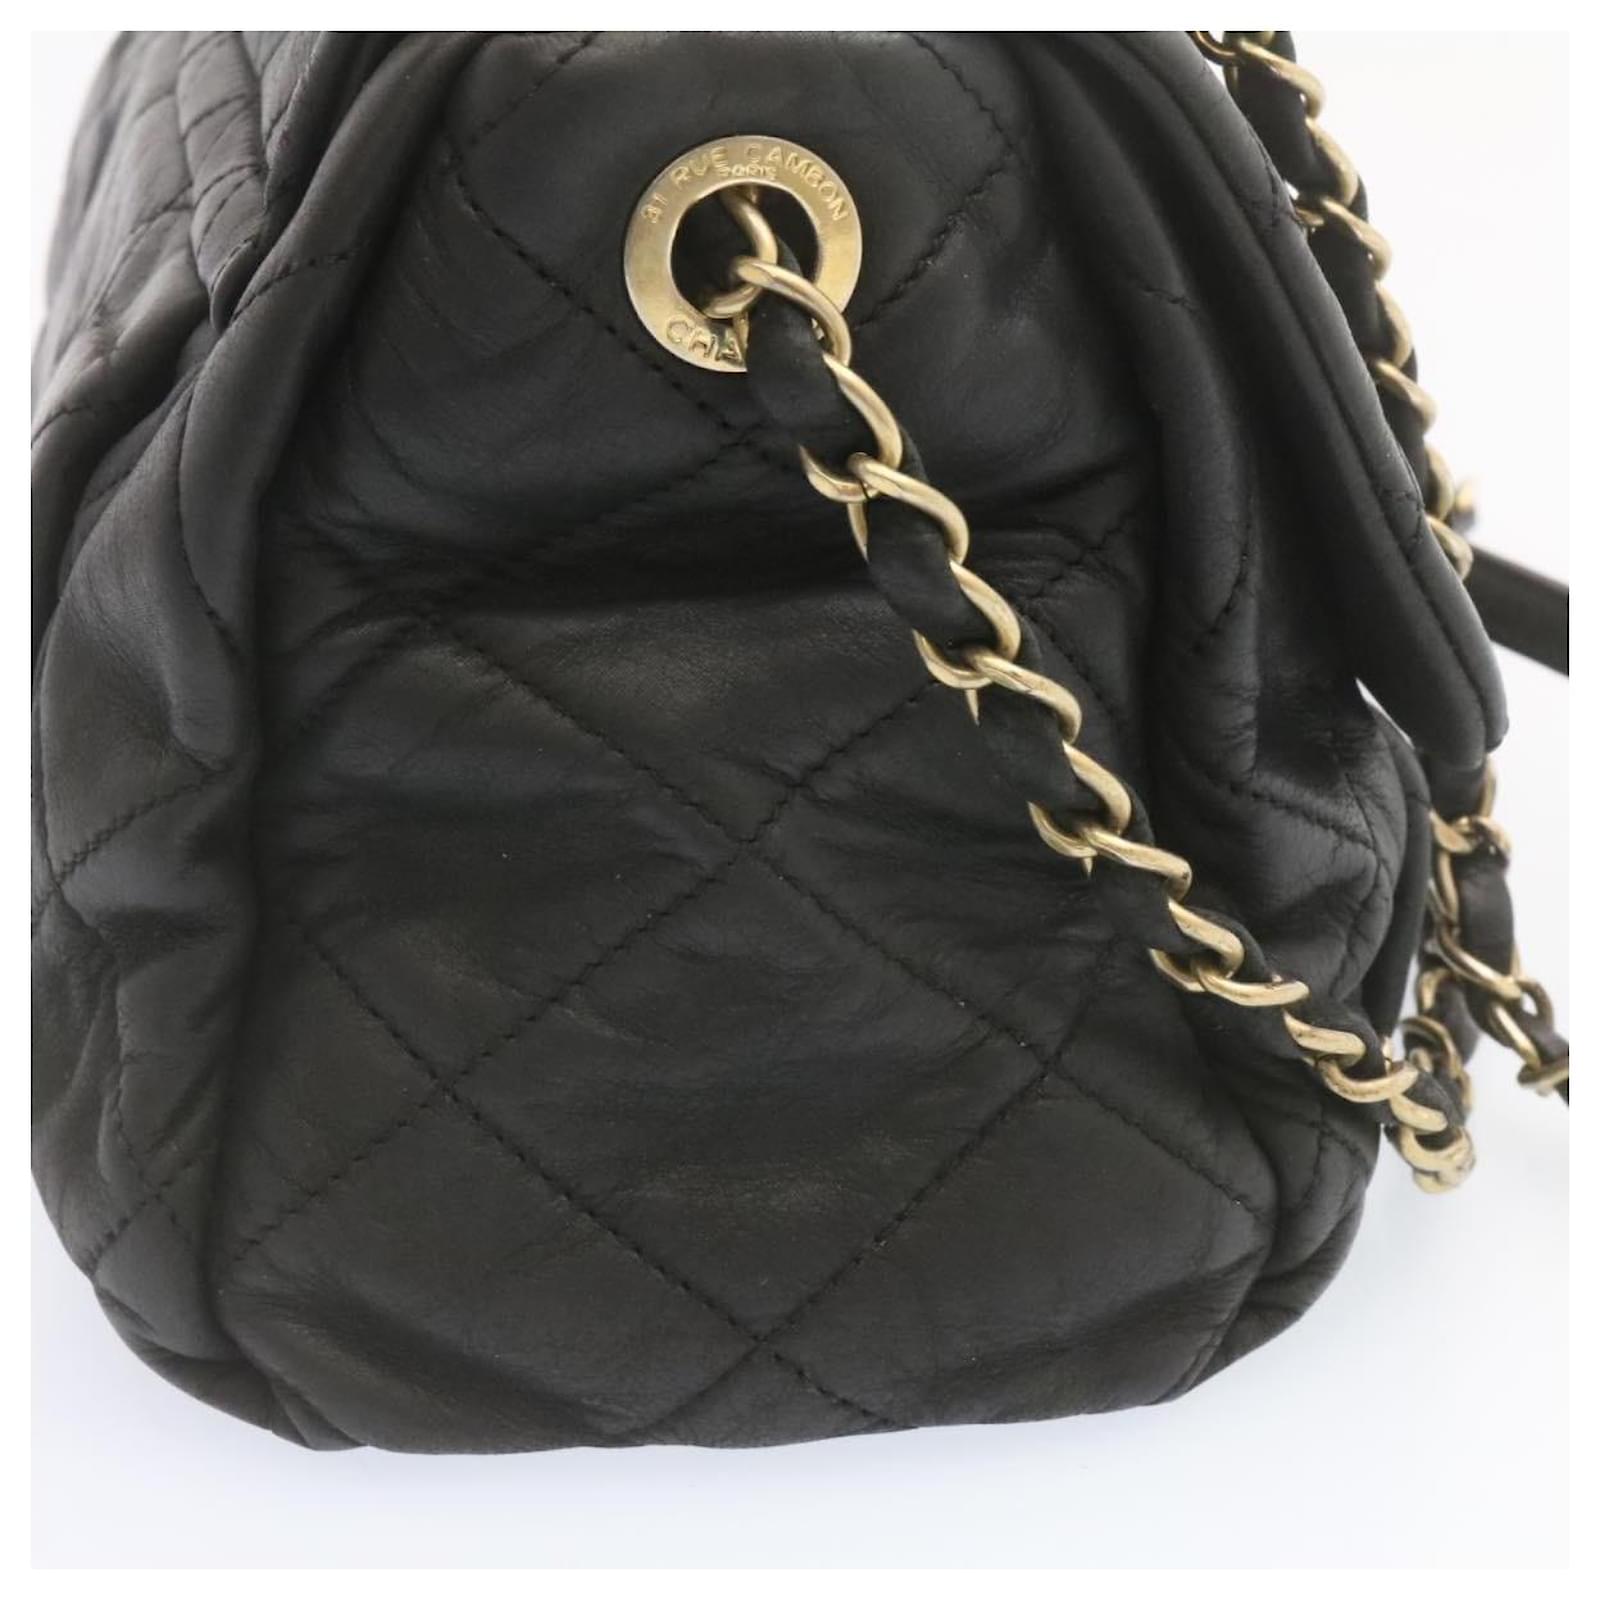 💞 Pink 31 RUE CAMBON Matelasse Turnlock W Chain Shoulder Flap Bag